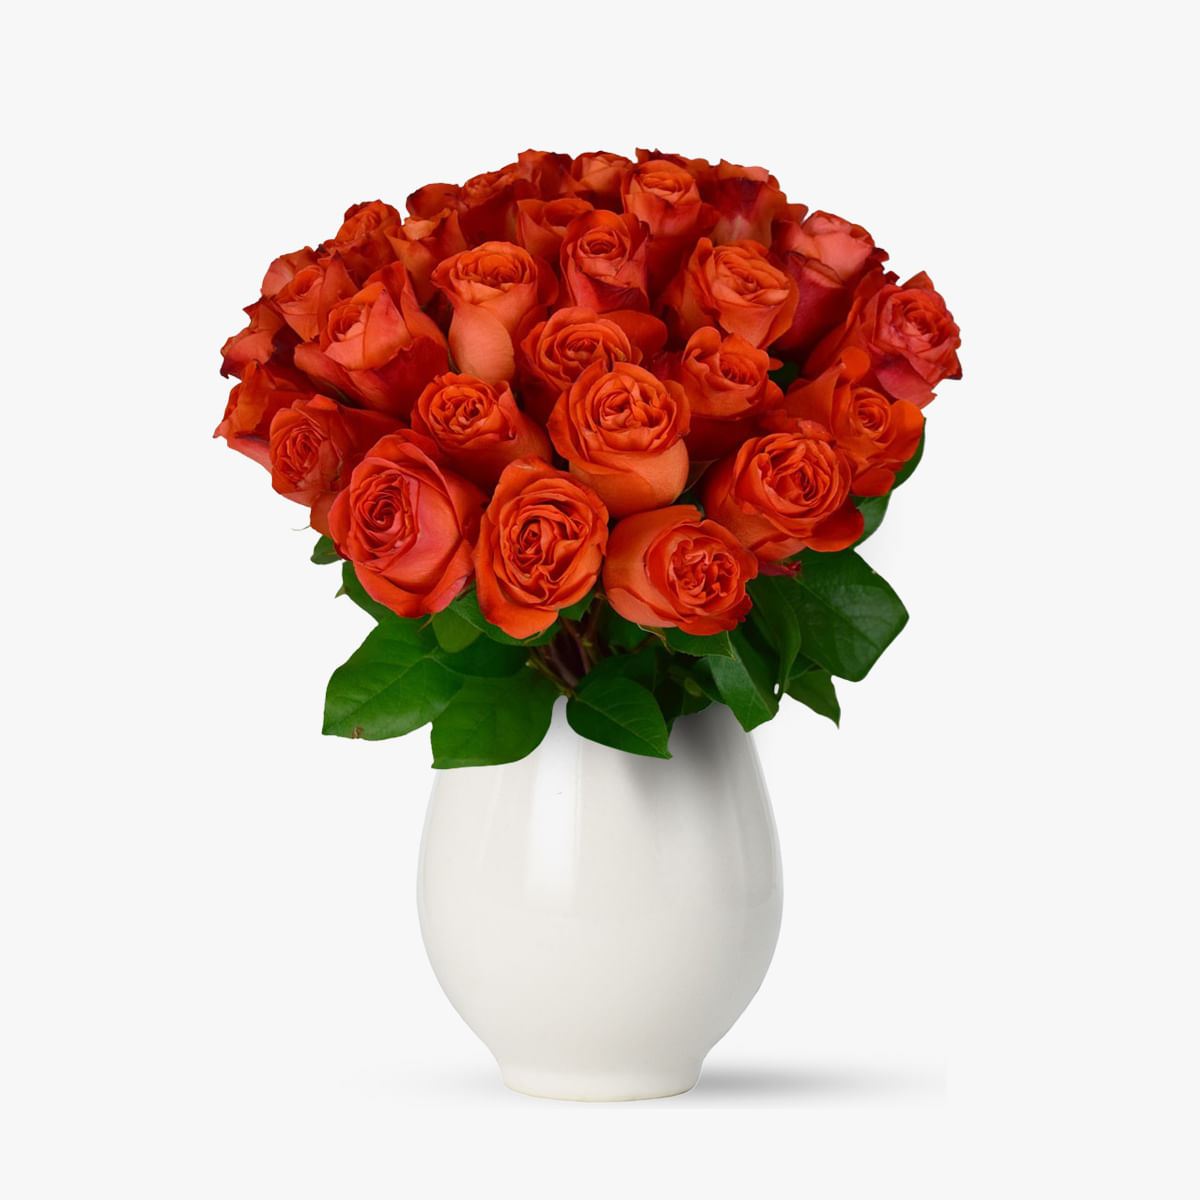 Buchet de 35 trandafiri portocalii – Standard Buchet